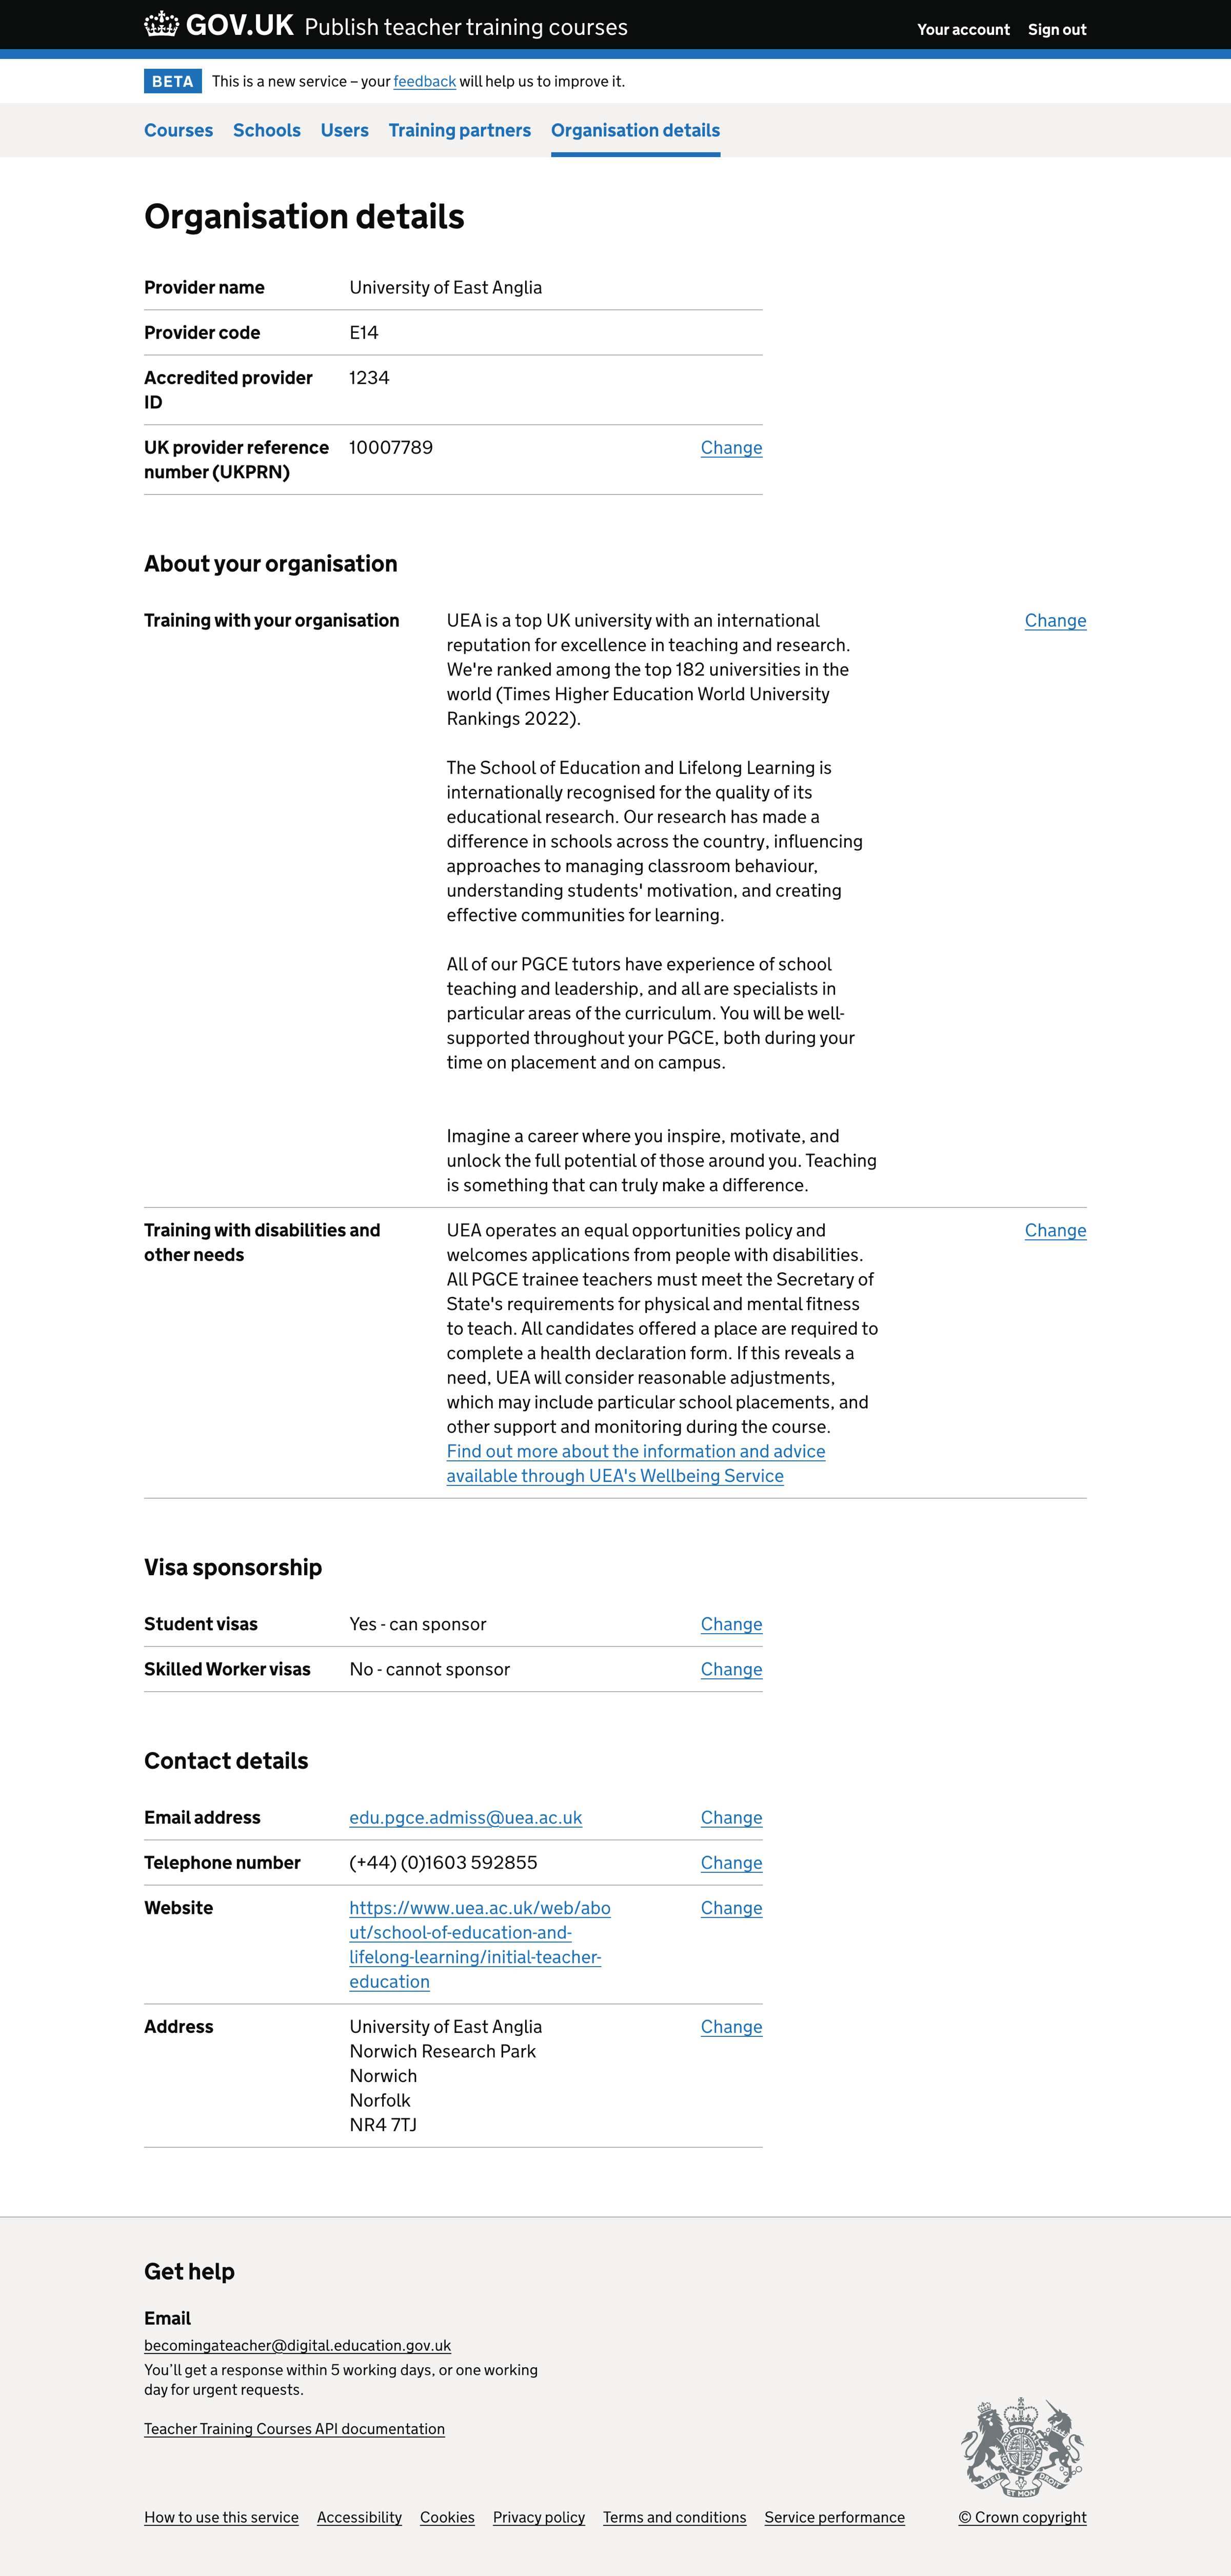 Screenshot of Organisation details - accredited provider